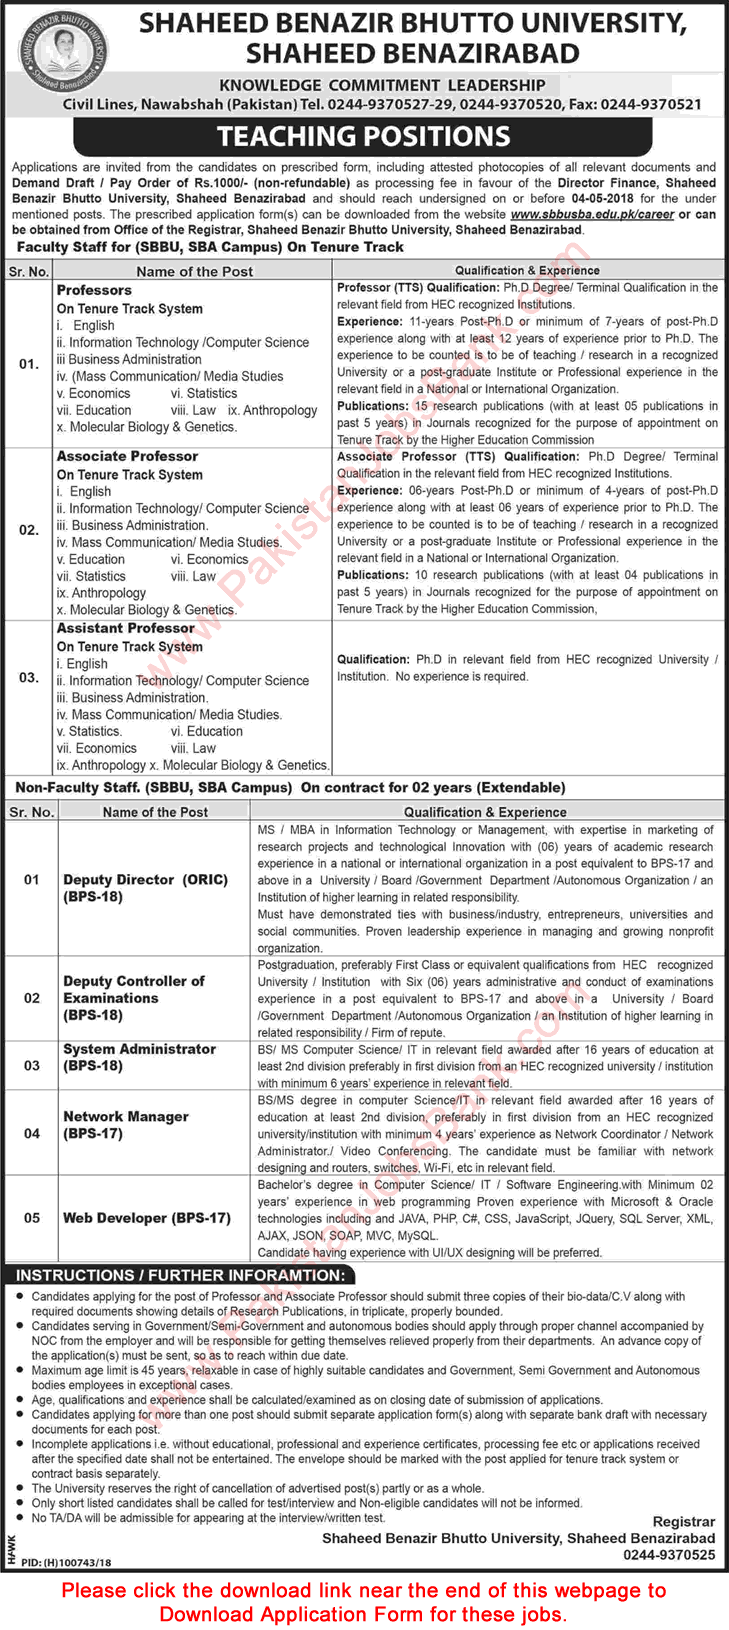 Shaheed Benazir Bhutto University Shaheed Benazirabad Jobs April 2018 Application Form Download SBBU Latest